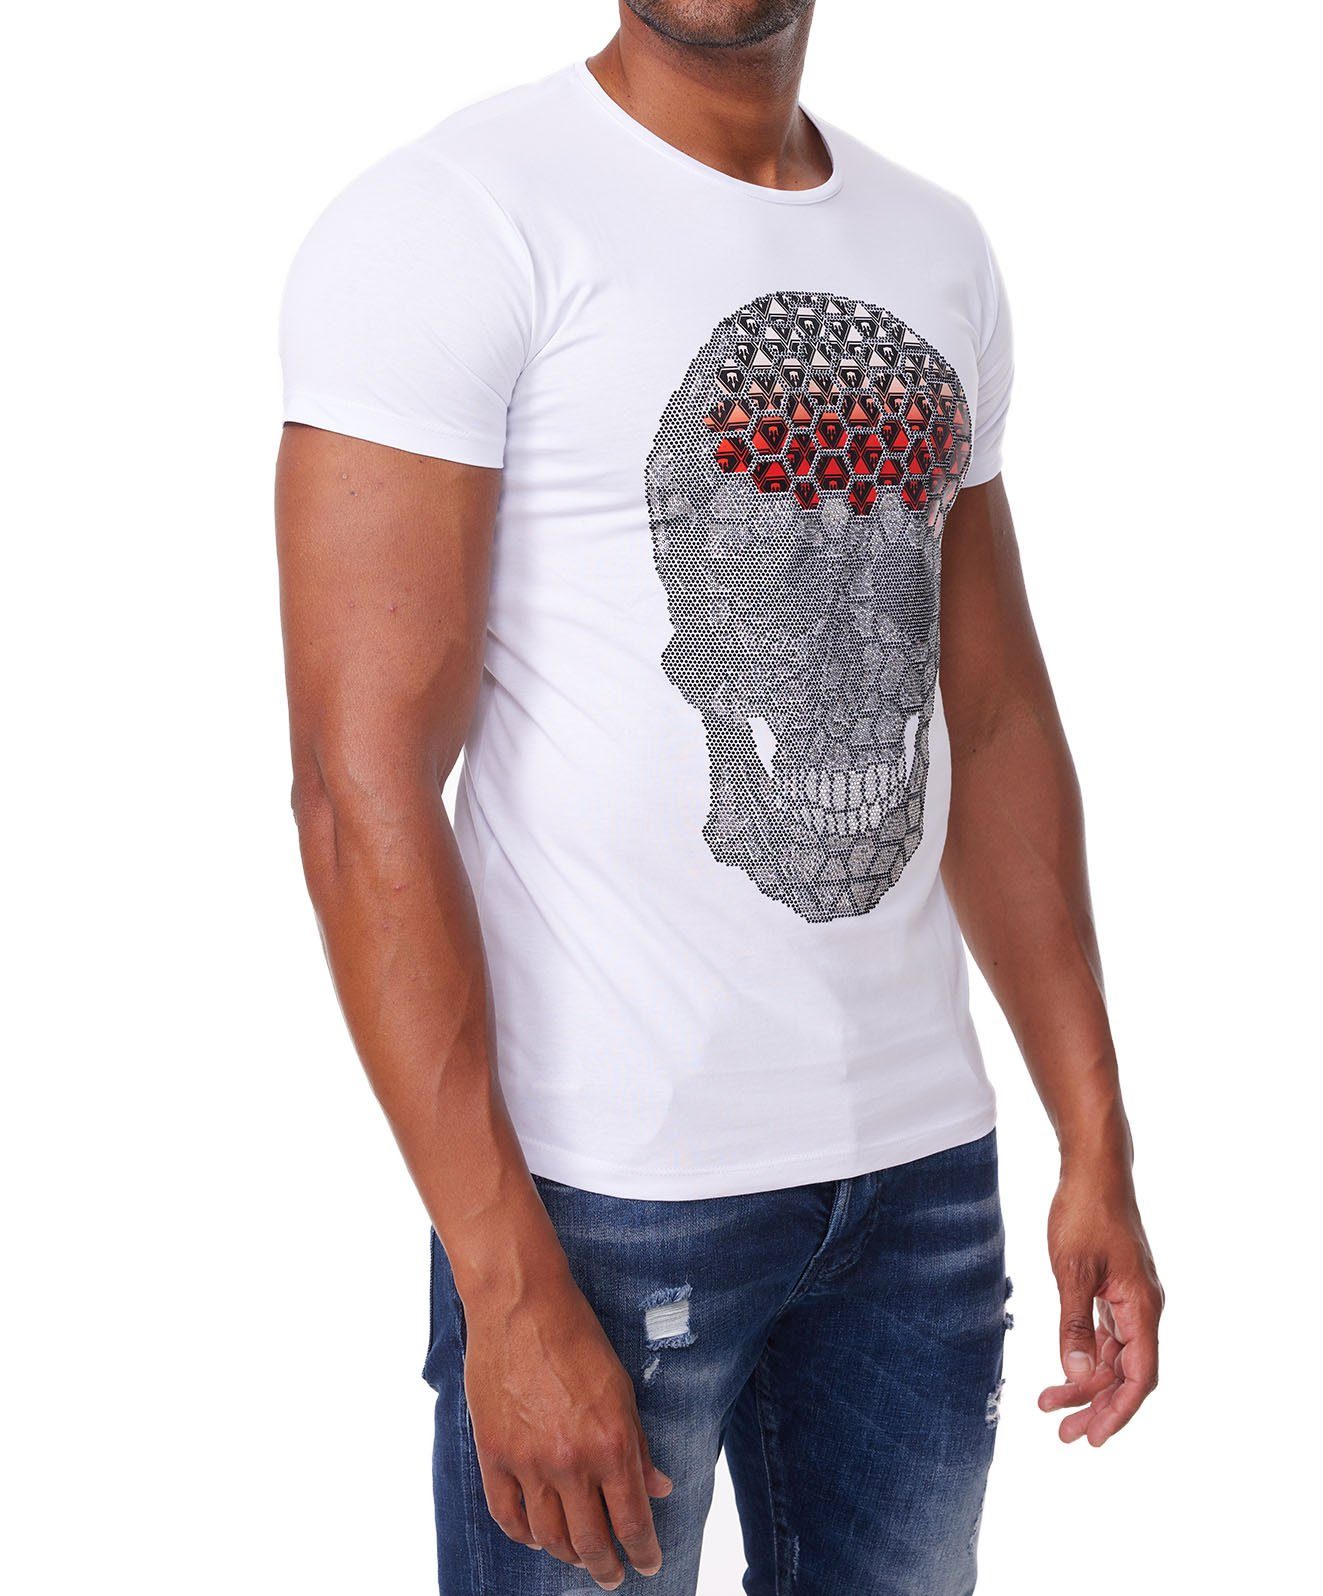 Lässiges Kurzarm mit Herren TRUENO besonderem T-Shirt Totenkopf T-Shirt Motiv